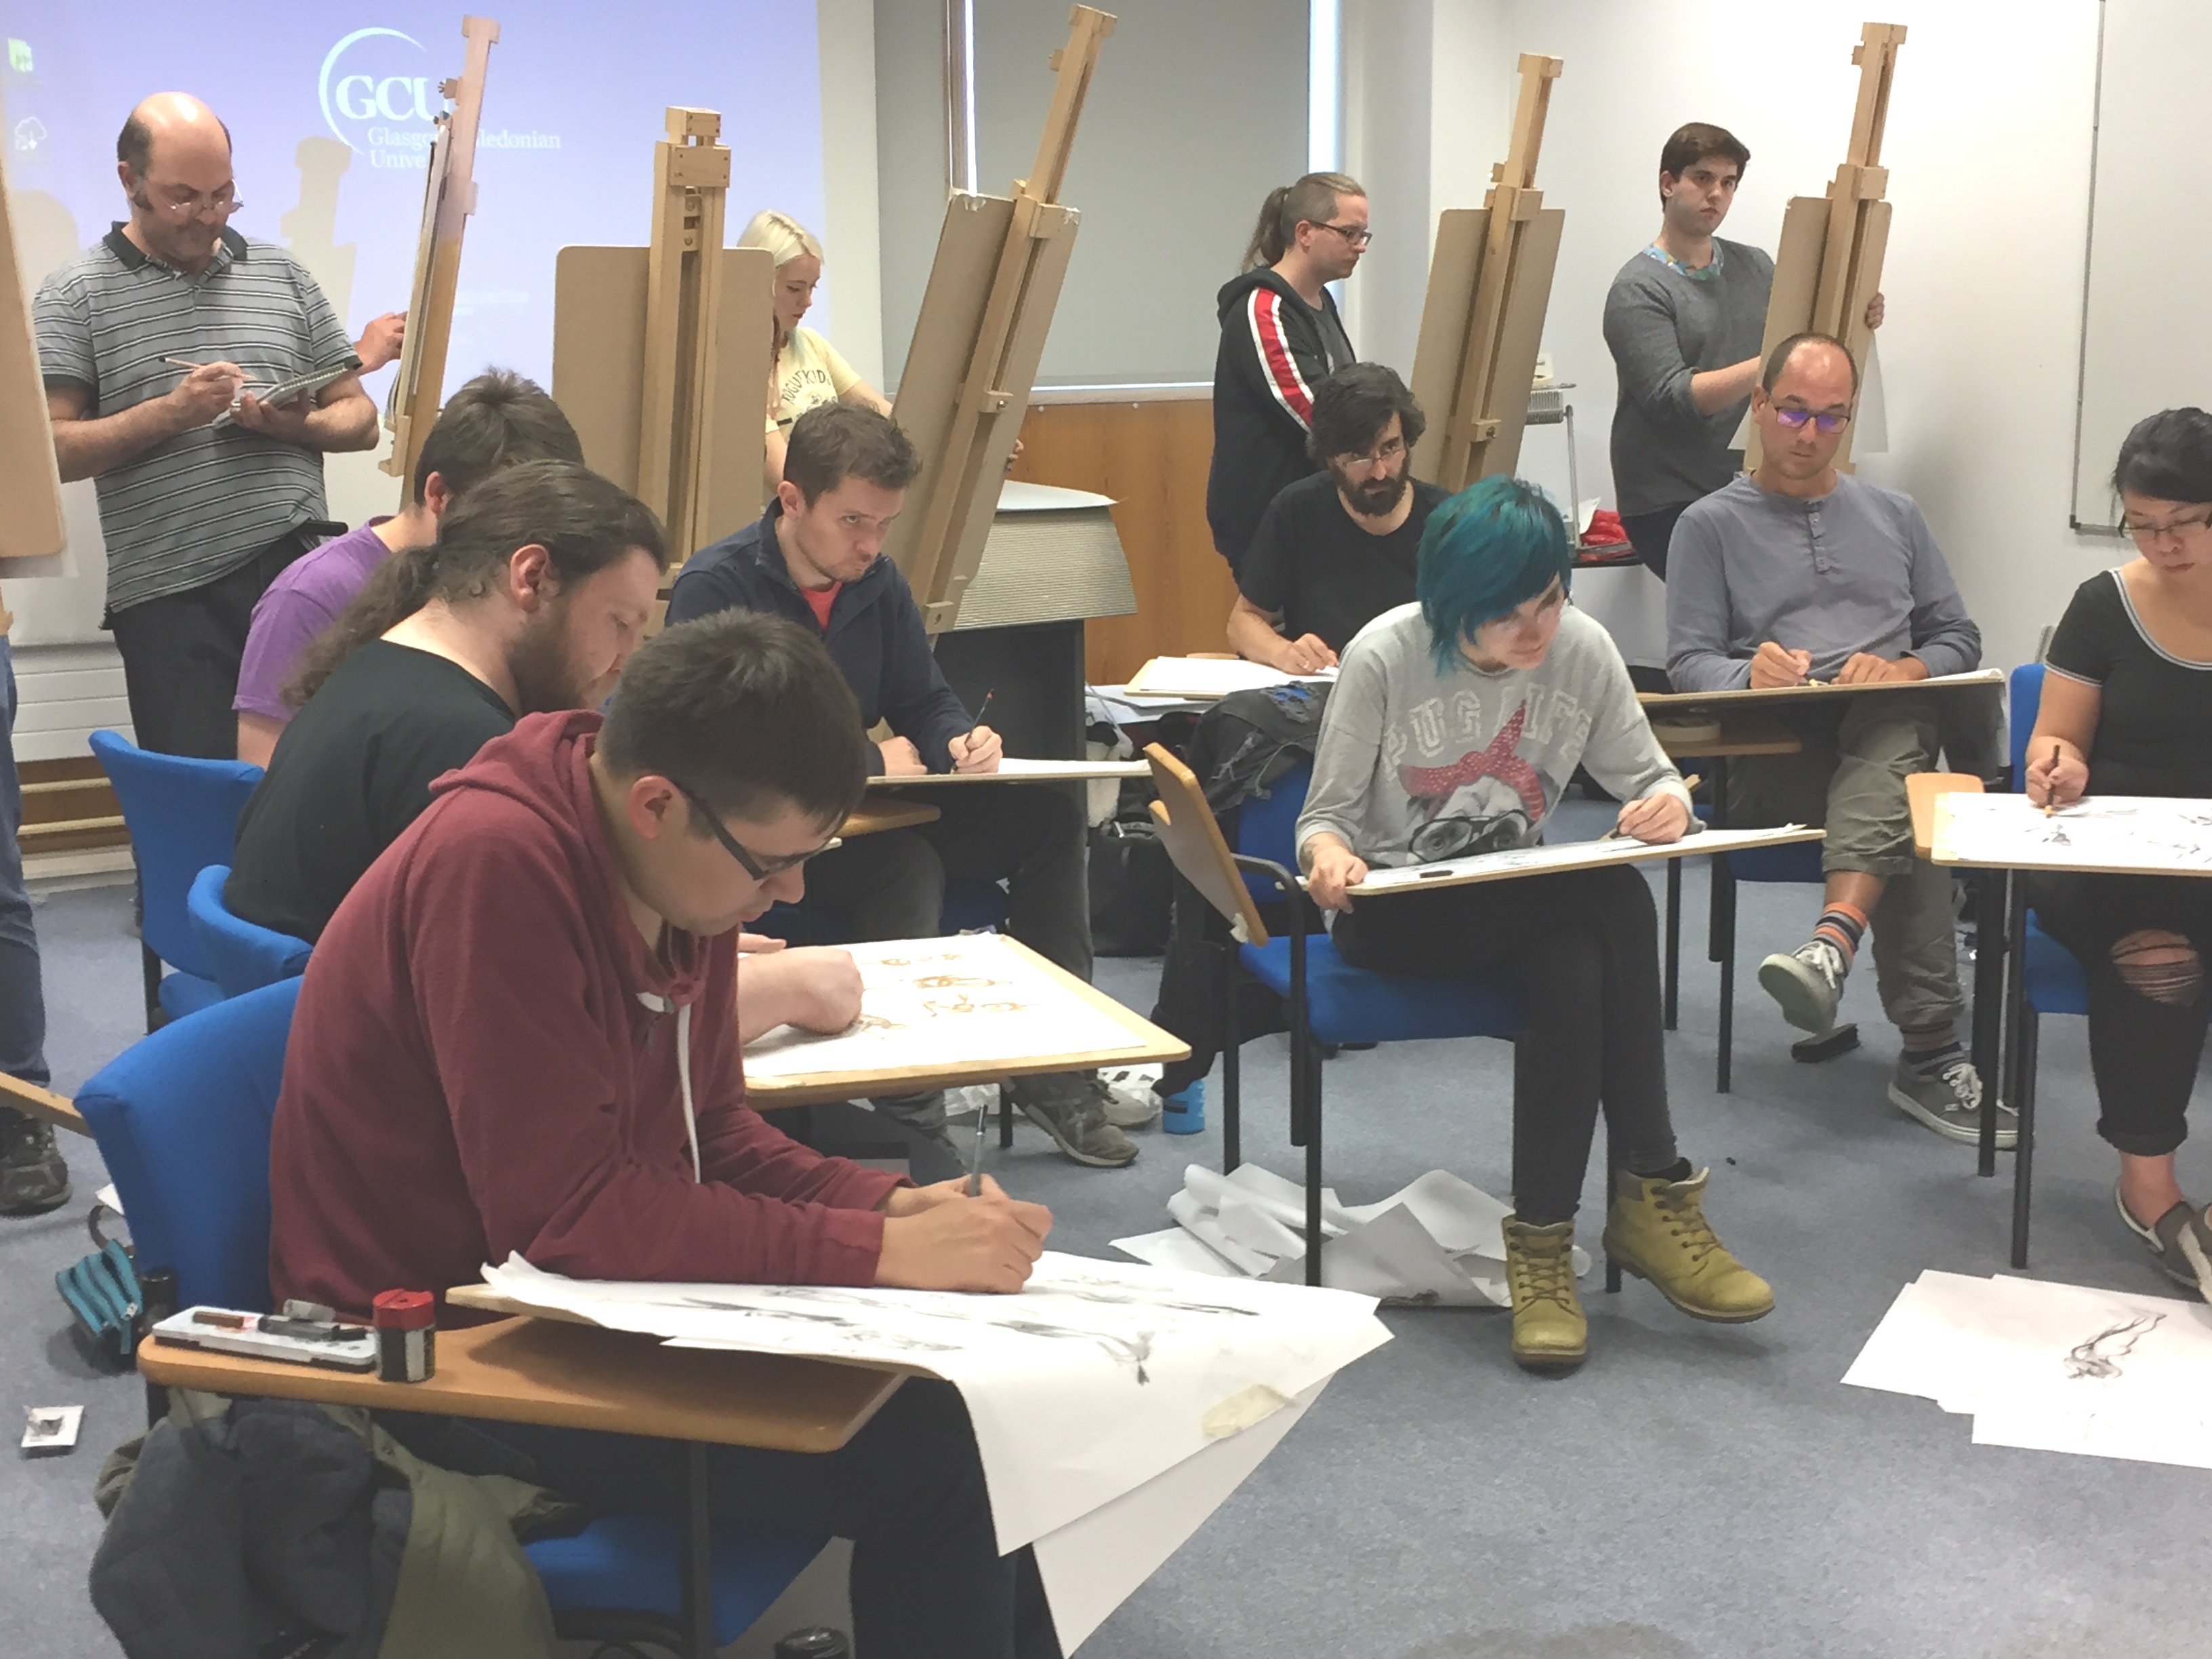 Karl's workshop at Glasgow Caledonian University - Glasgow Scotland